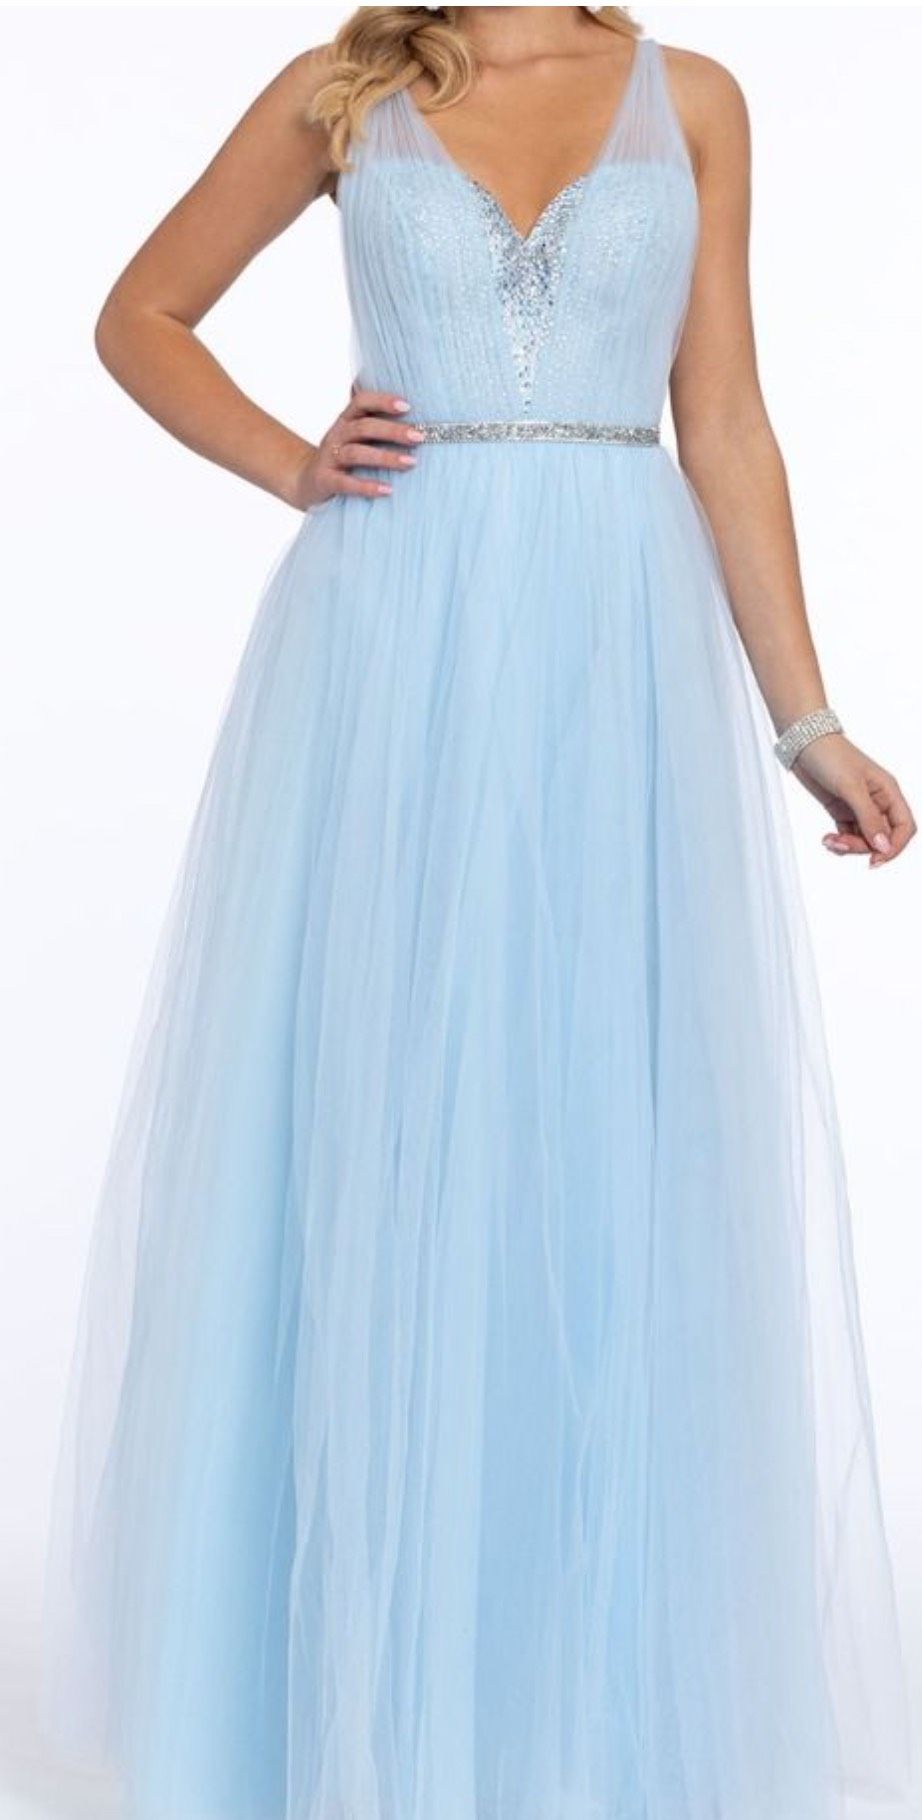 Camille La Vie Size 0 Prom Sheer Light Blue Side Slit Dress on Queenly